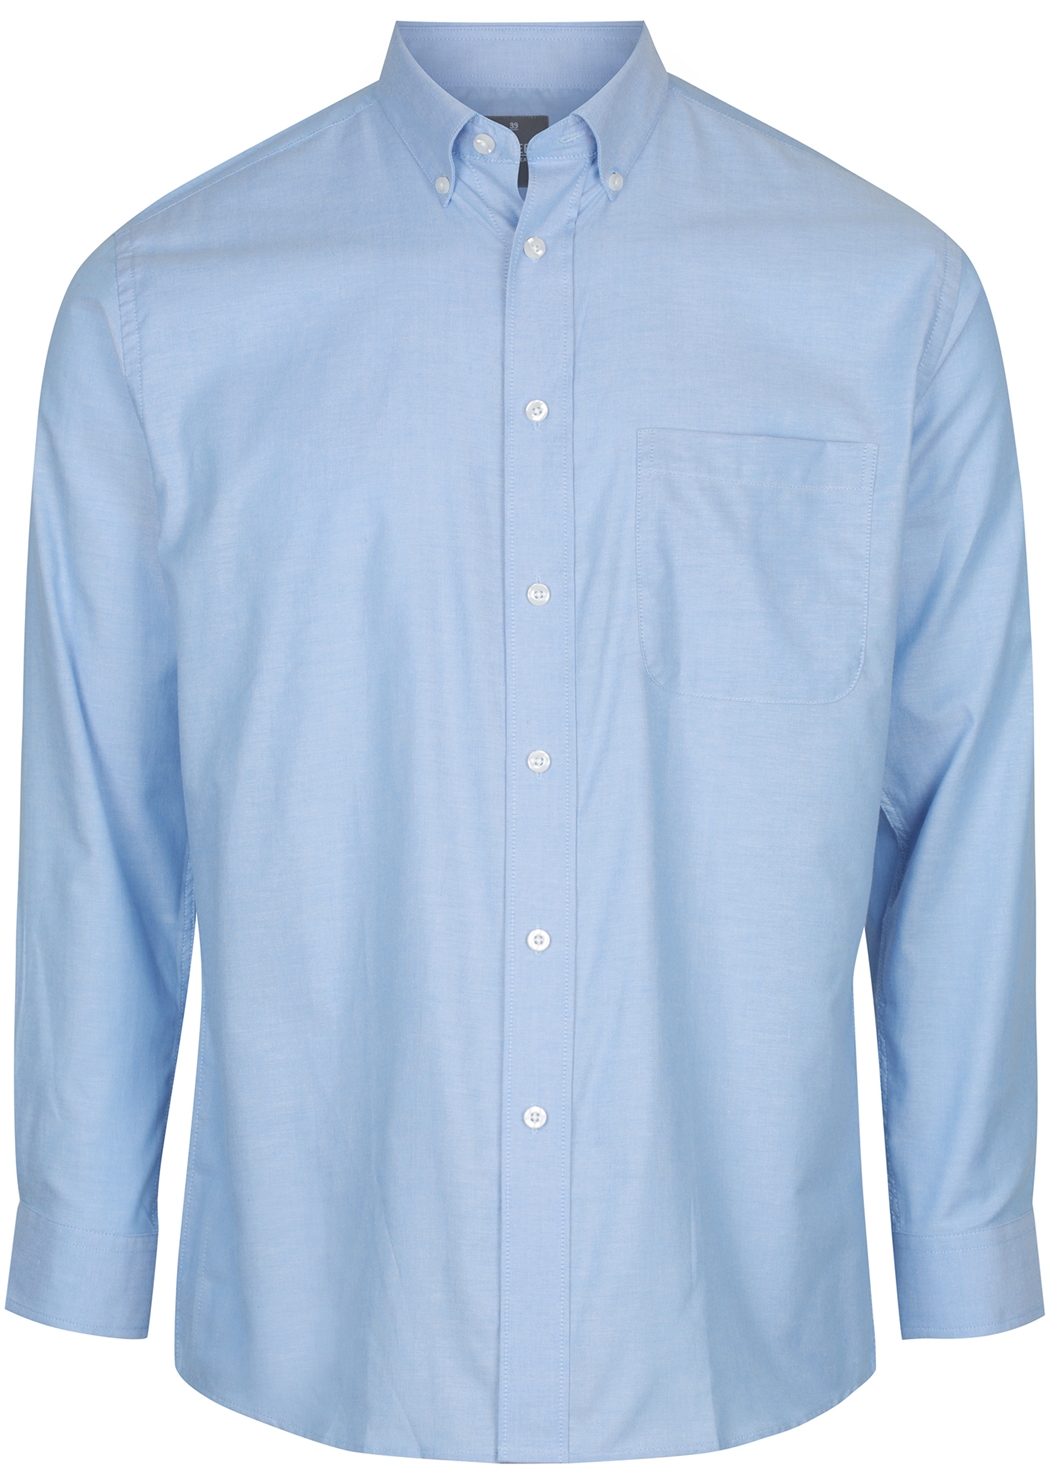 Blue Oxford Shirt